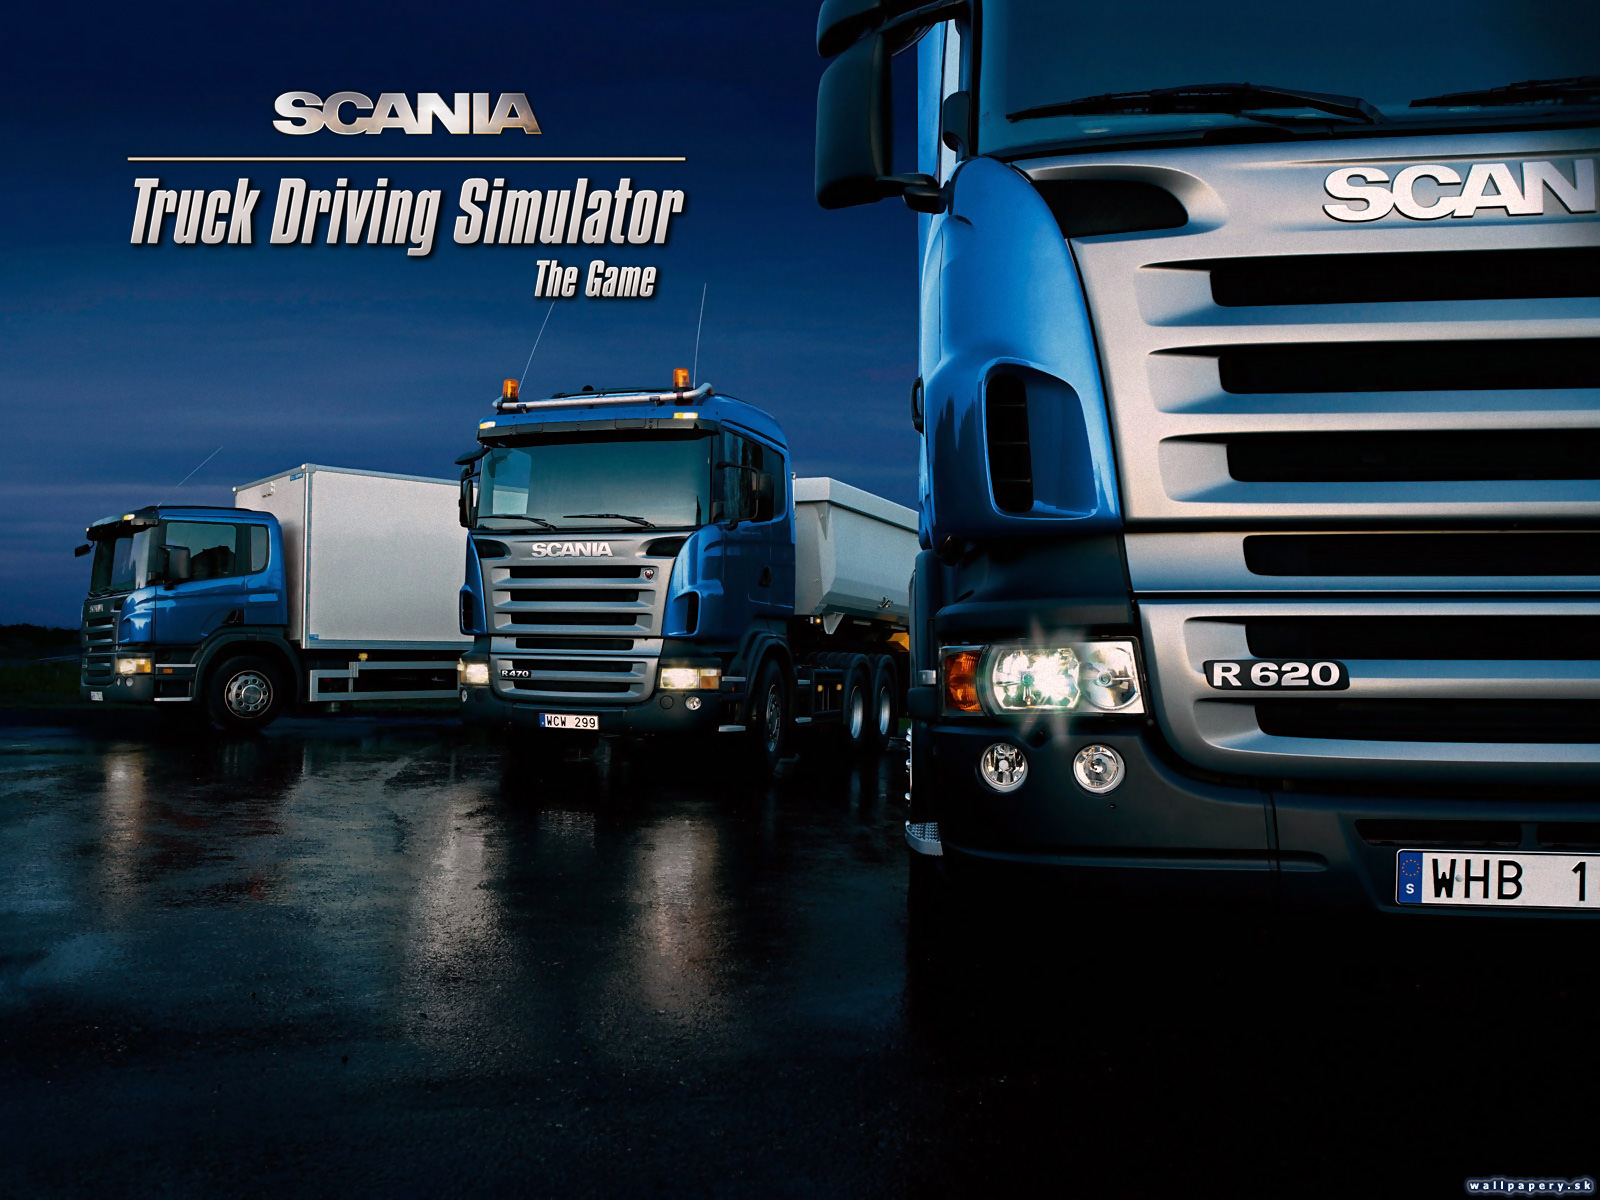 Scania Truck Driving Simulator - The Game - wallpaper 4